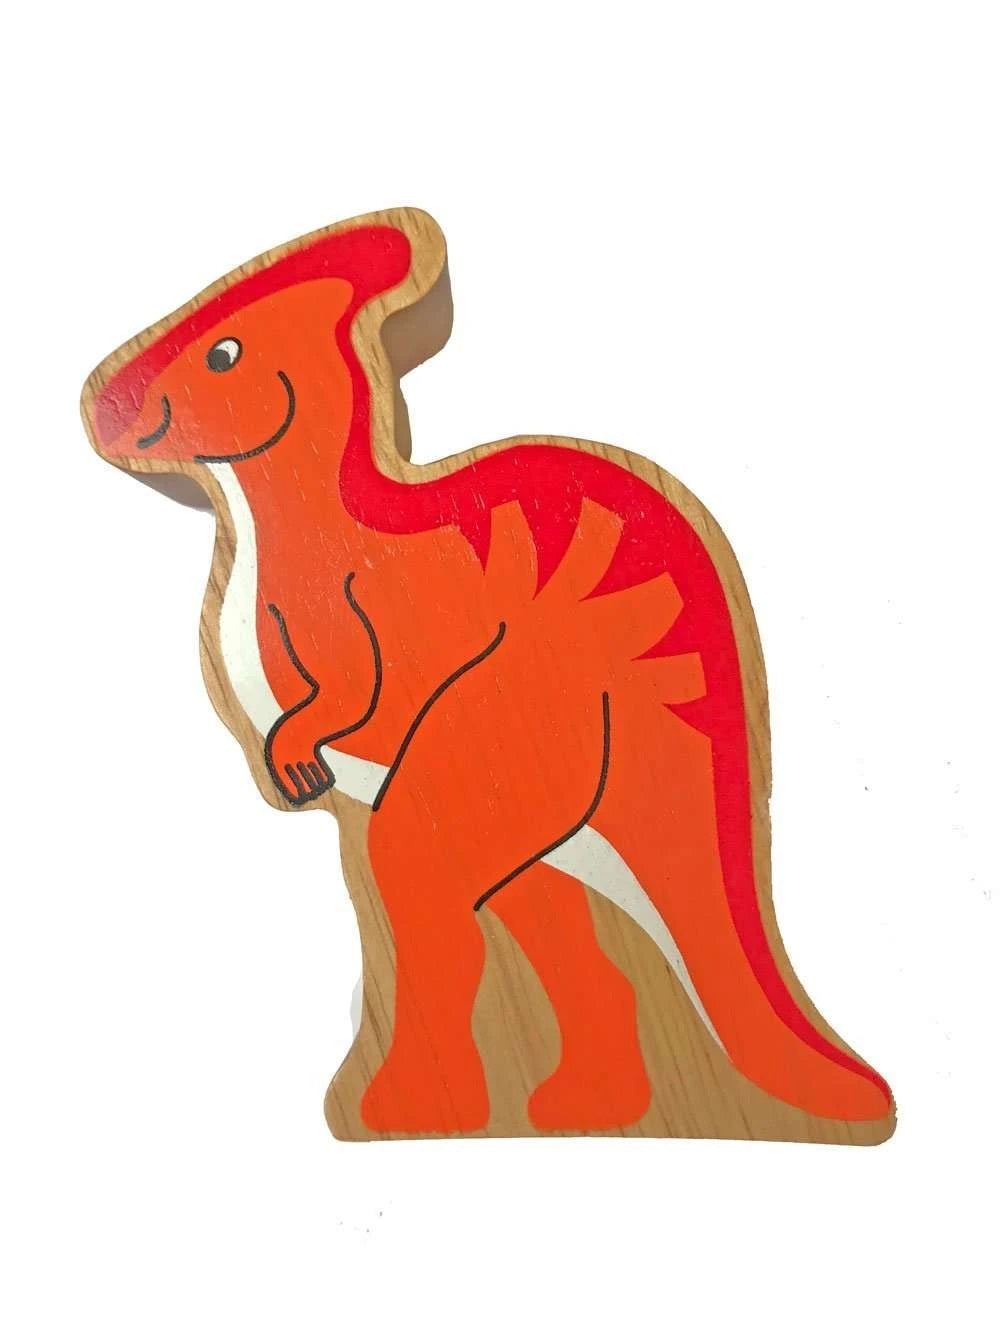 Lanka Kade Wooden Fair Trade Toy - Orange Parasaurolophus